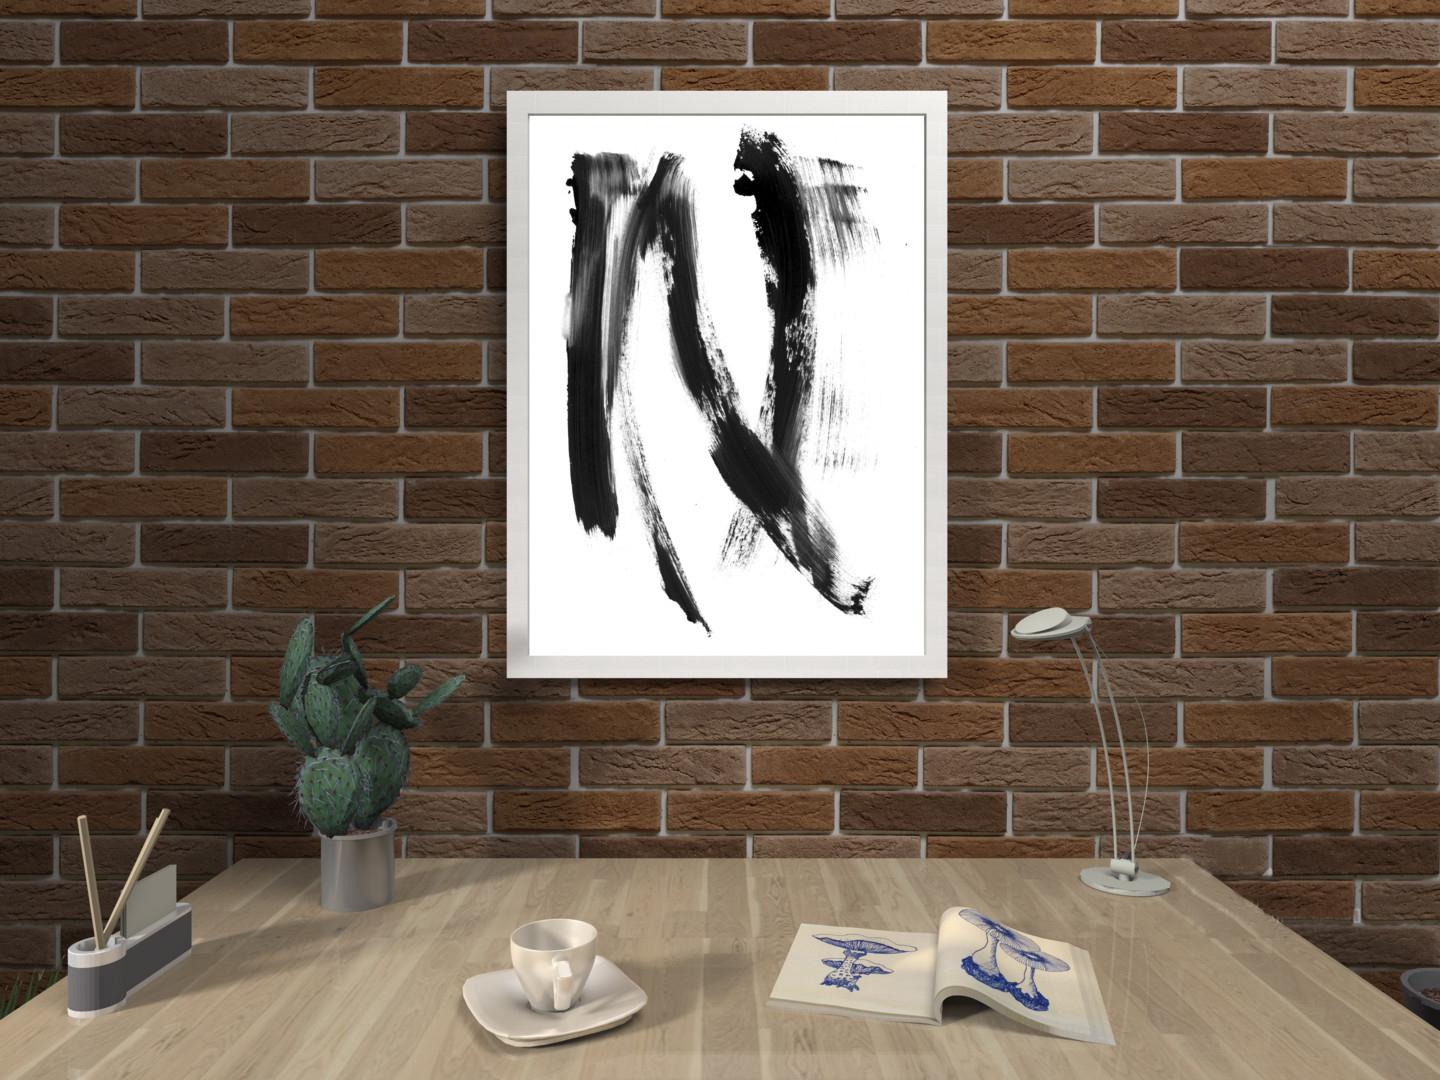 Black White Abstraction 011 Painting by Anastasia Vasilyeva, 2019 For Sale 1